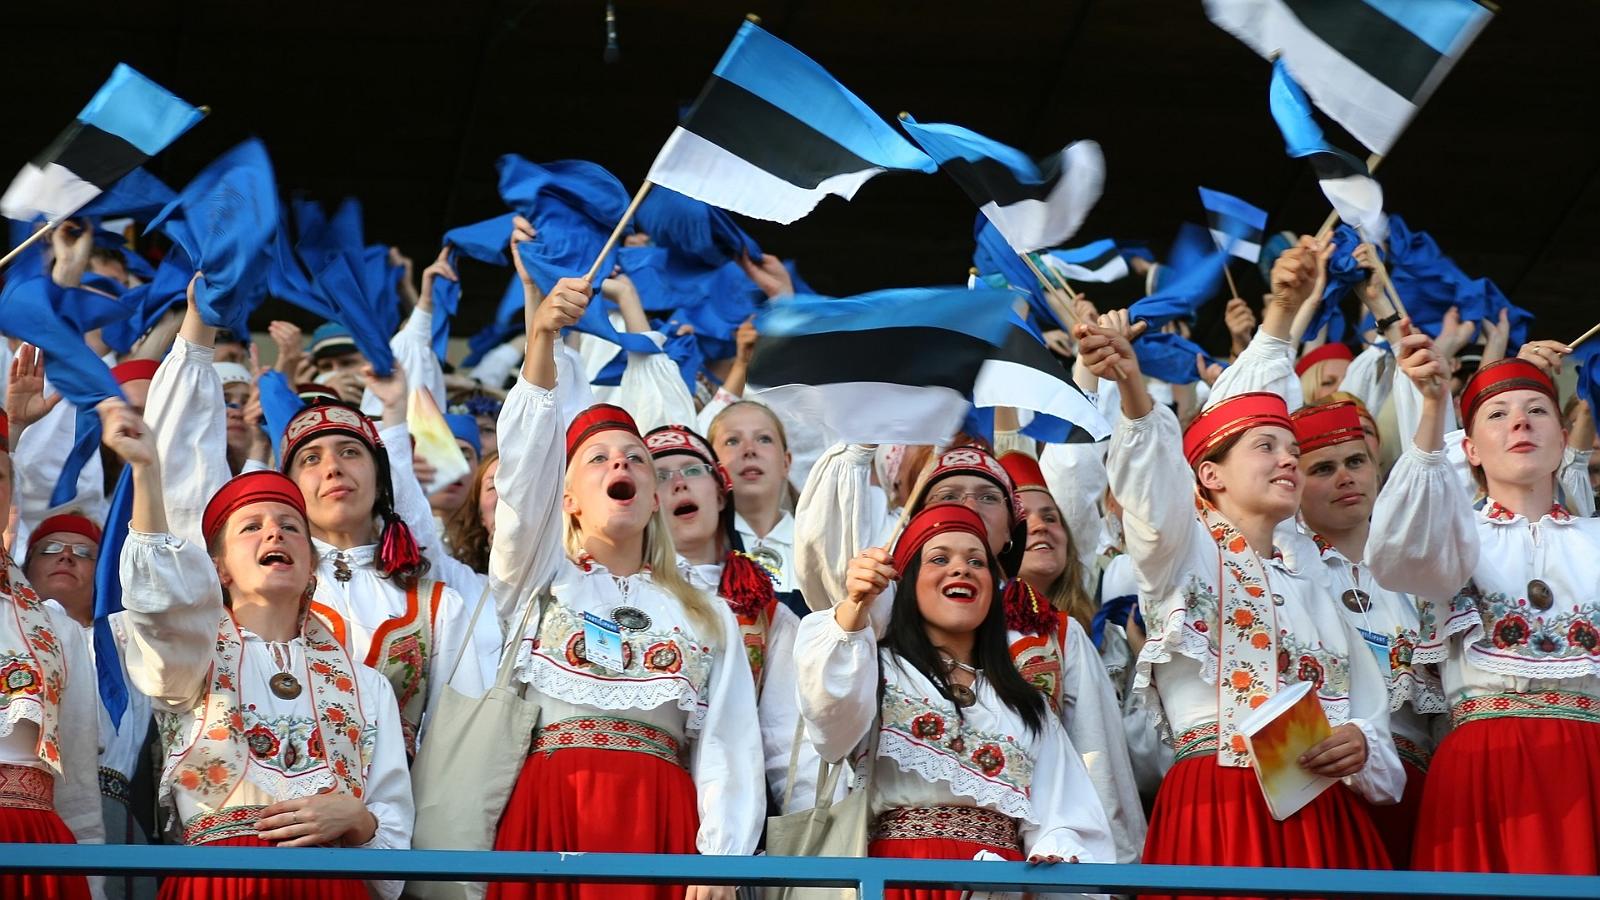 Estonian flag symbolizes culture and history.